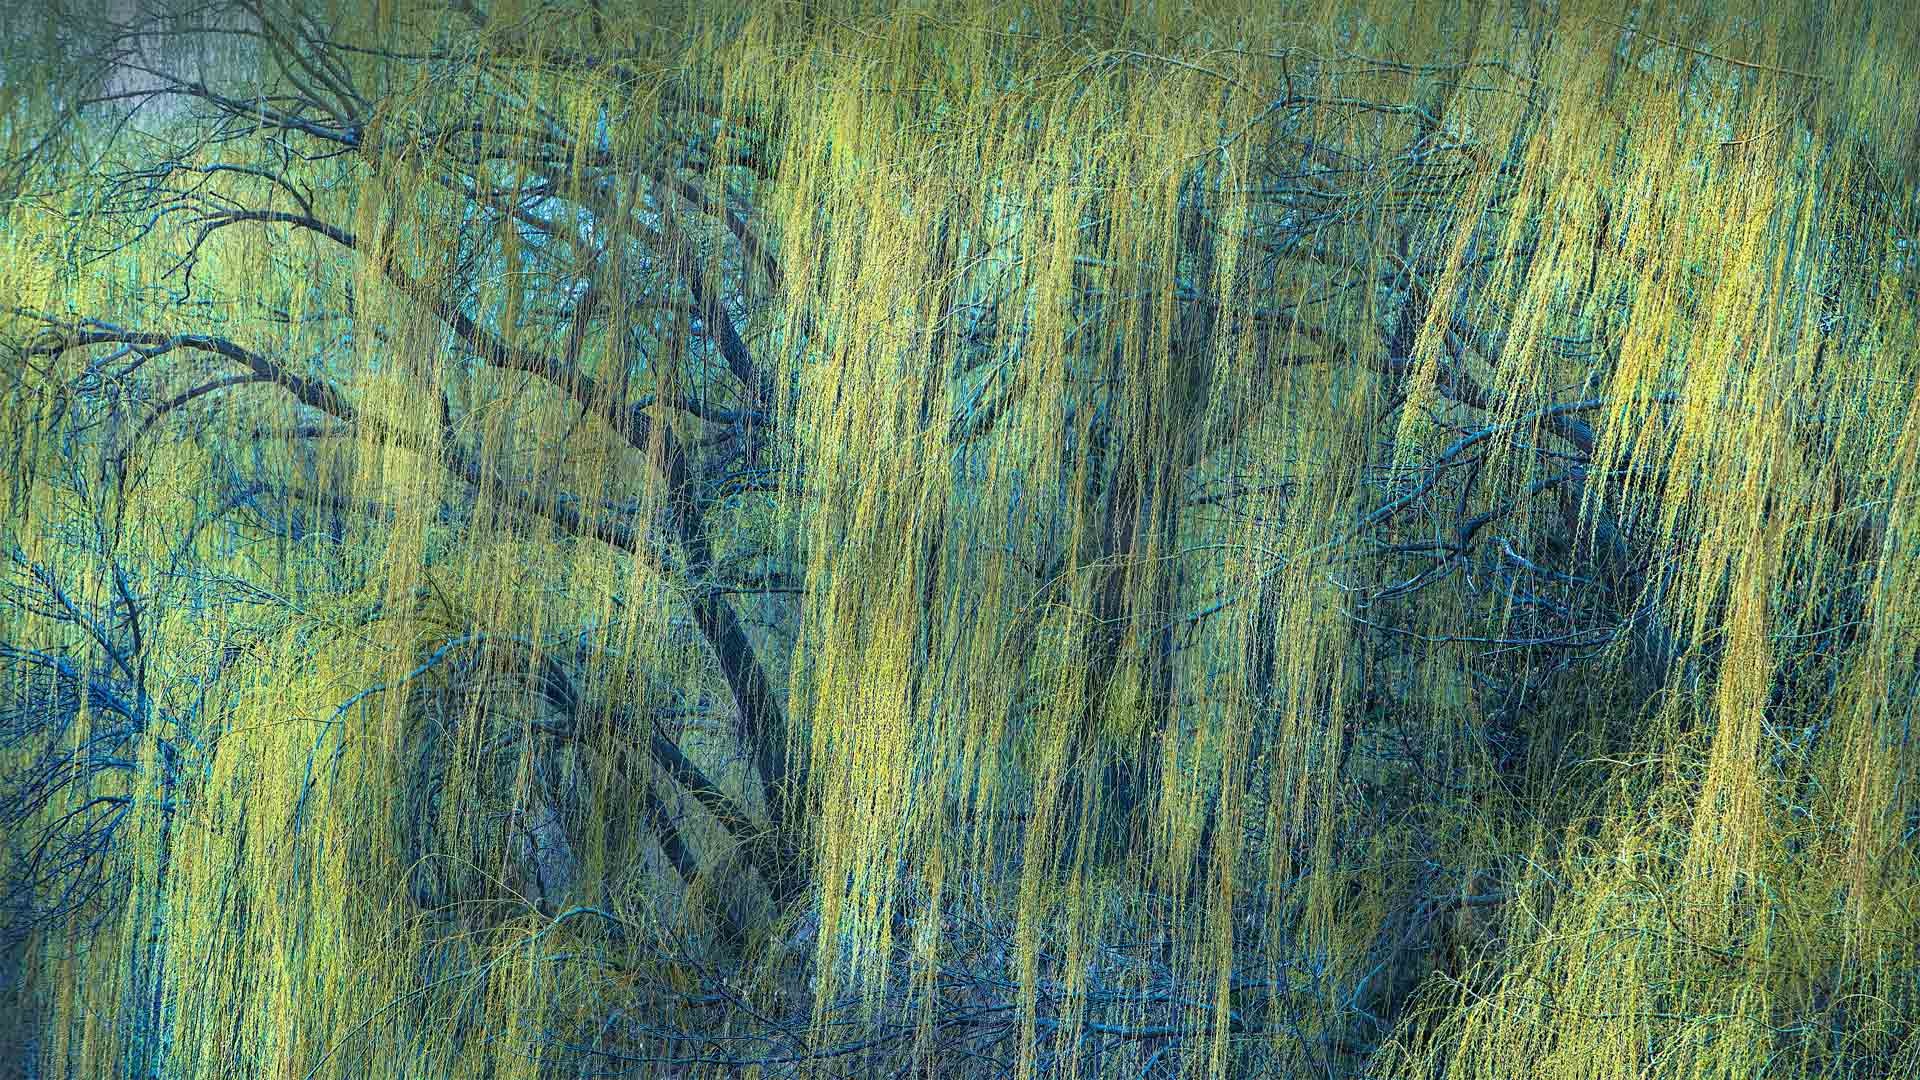 Willow tree in early spring, Minnesota - Jim Brandenburg